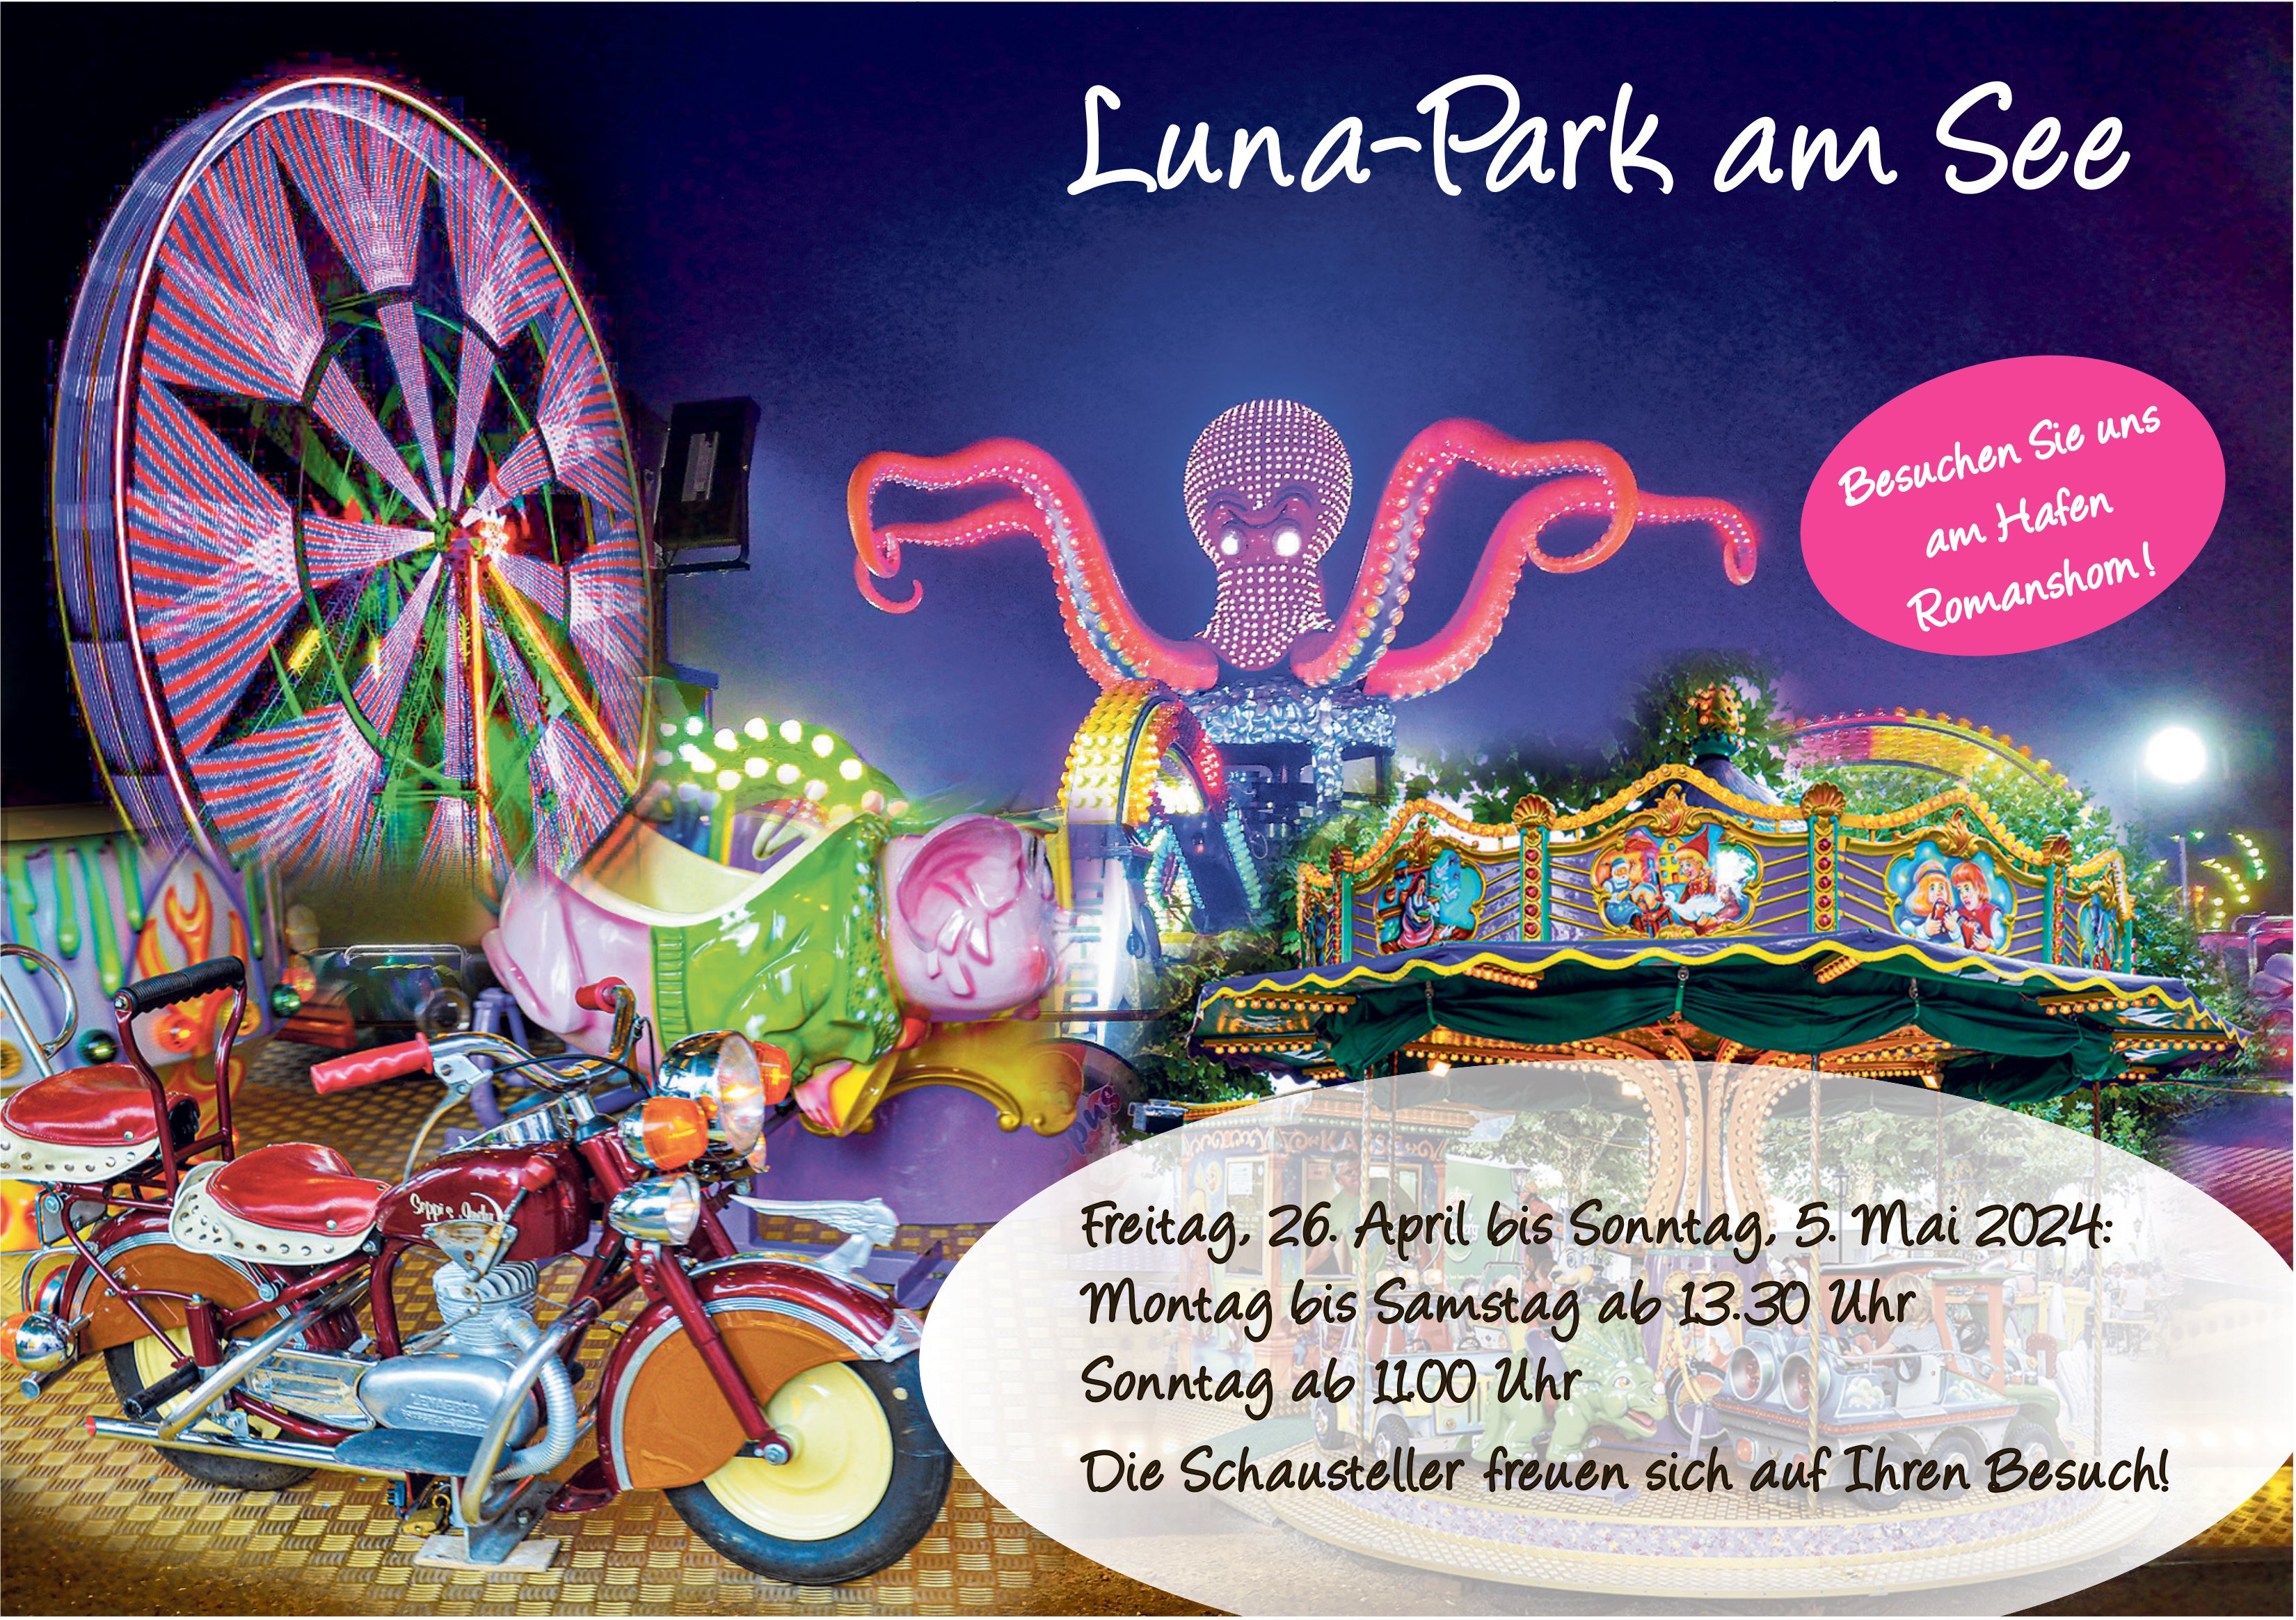 Luna-Park am See